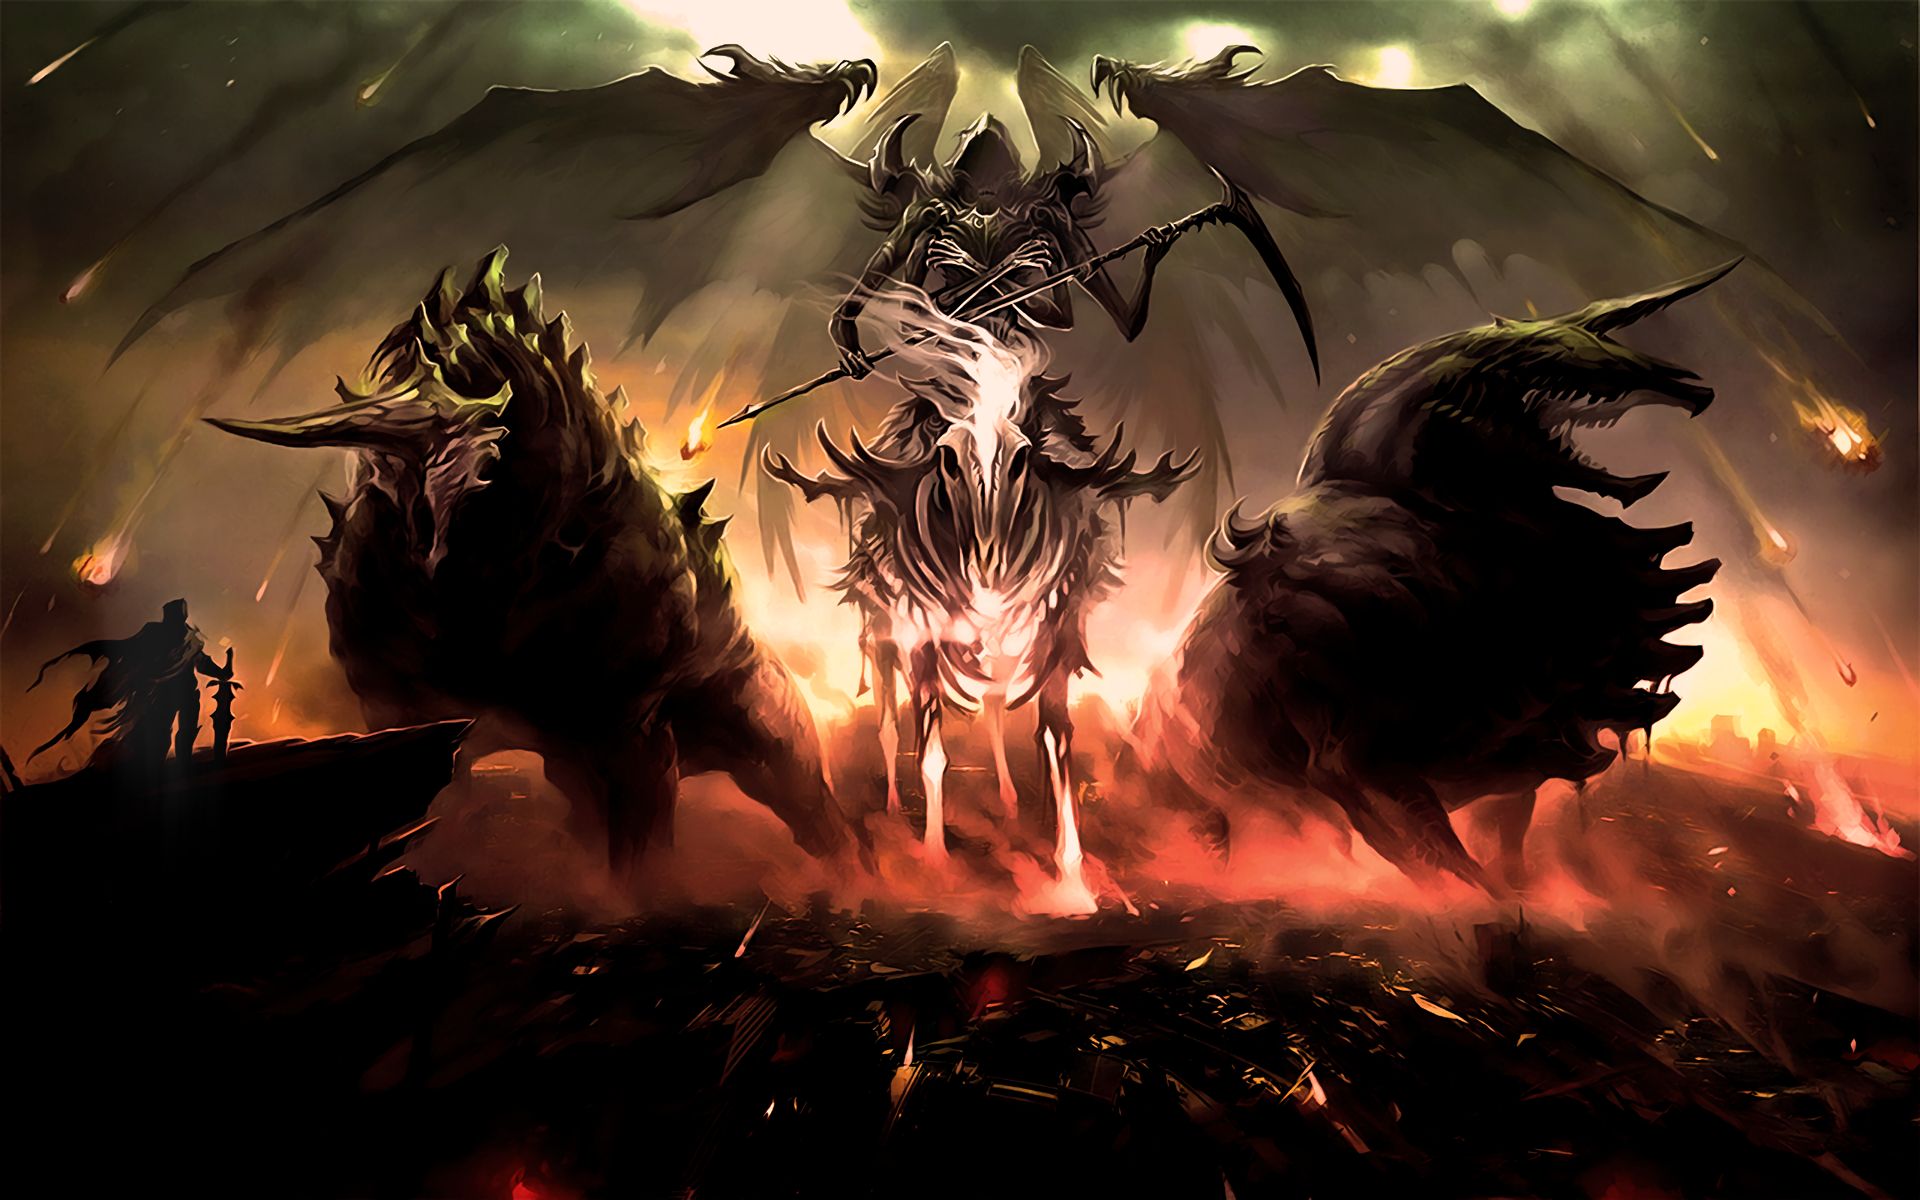 grim reaper, dark, beast, creature, fire, wings